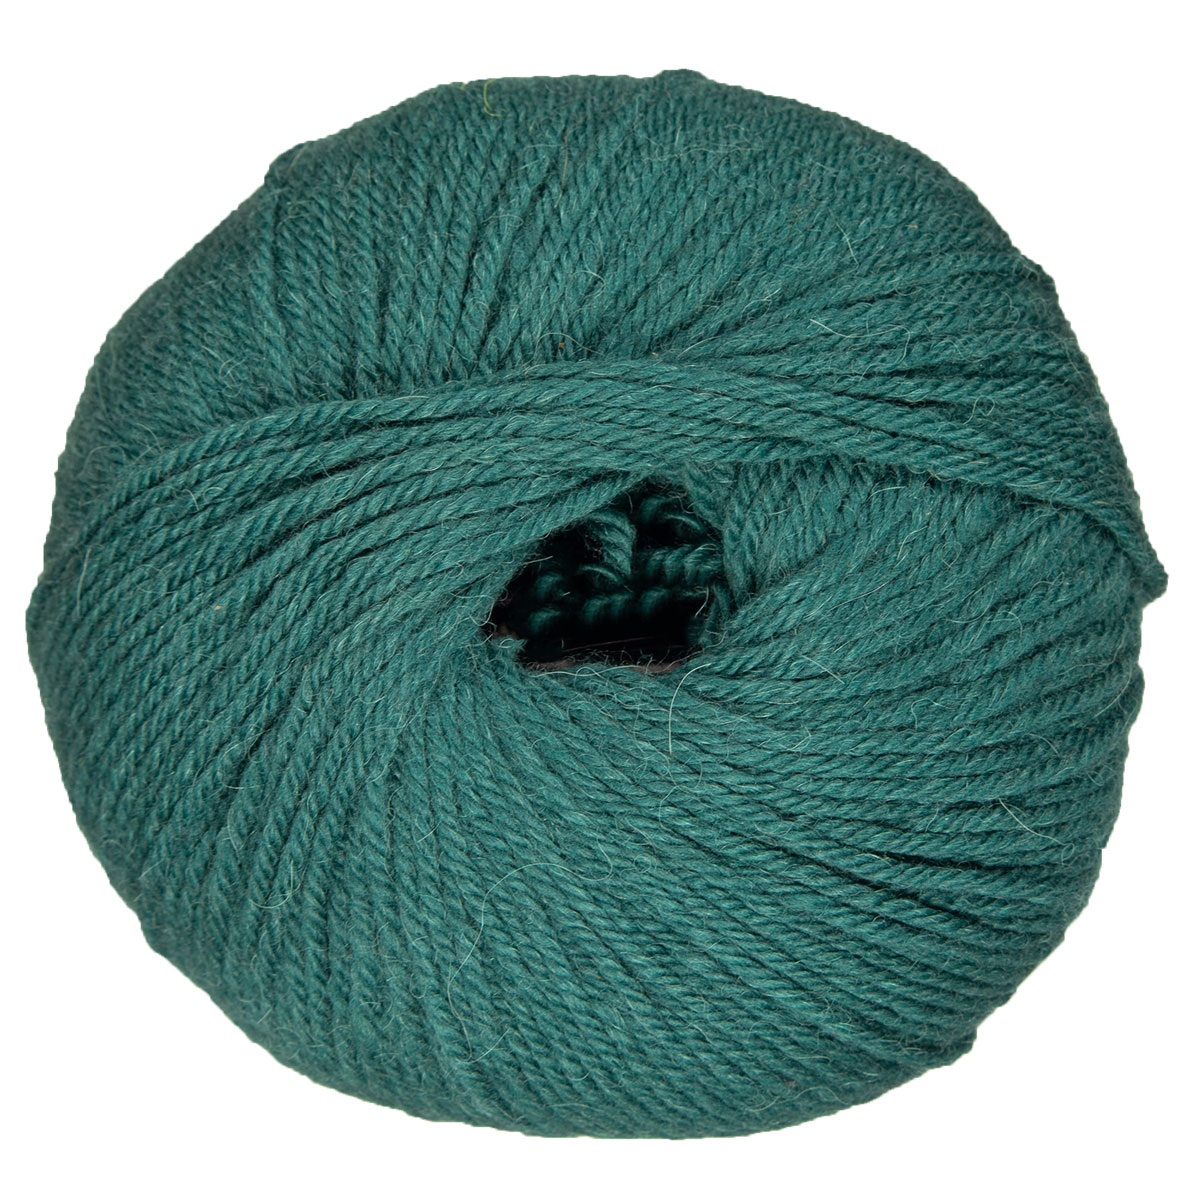 Yarn: Variegated dark green alpaca DK yarn